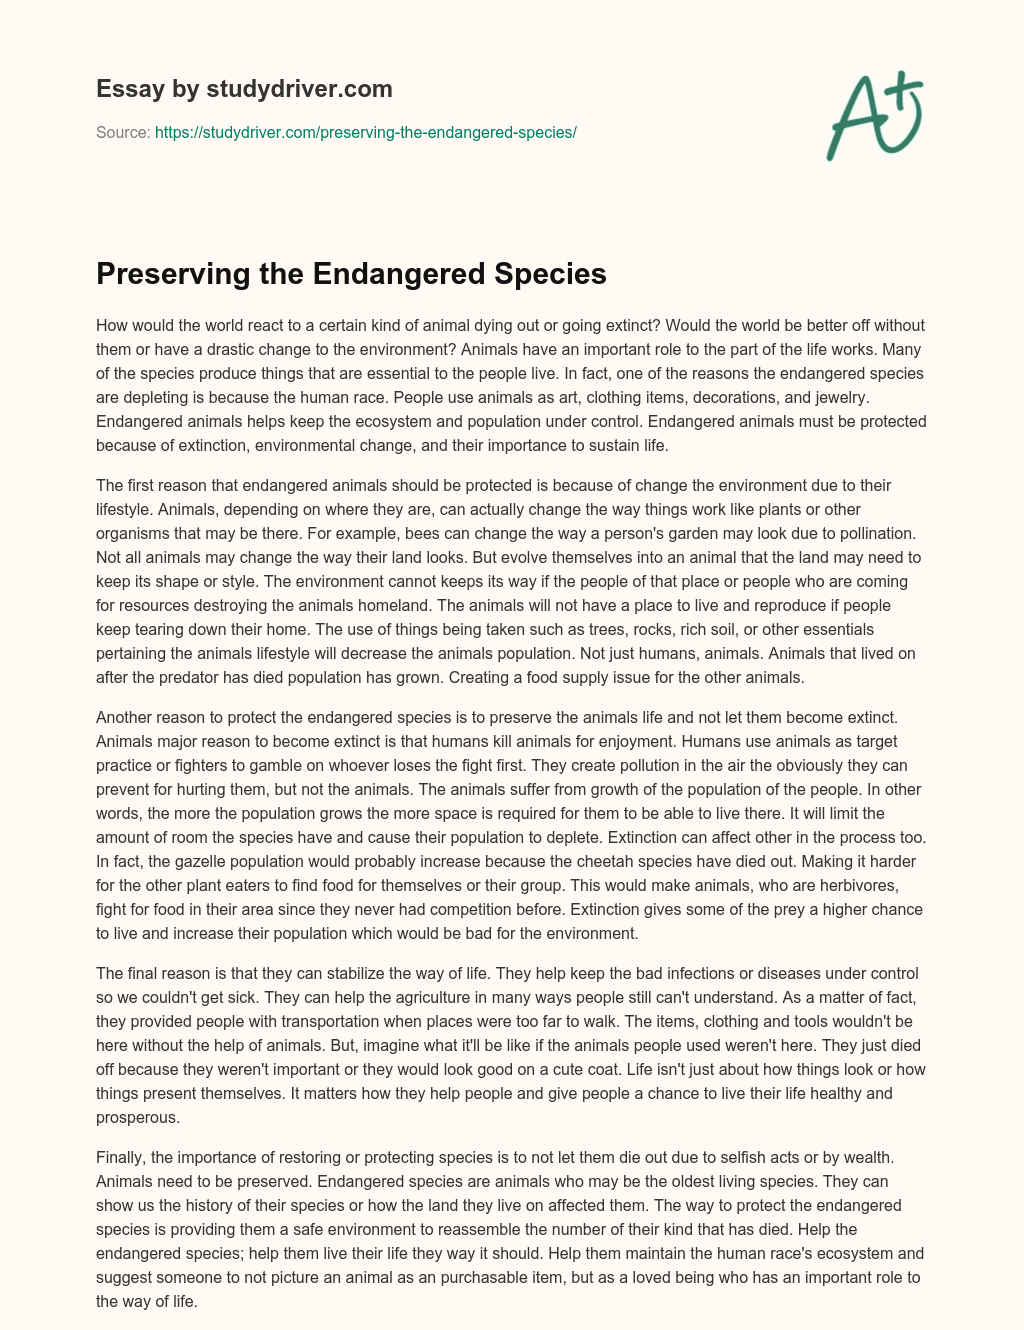 Preserving the Endangered Species essay